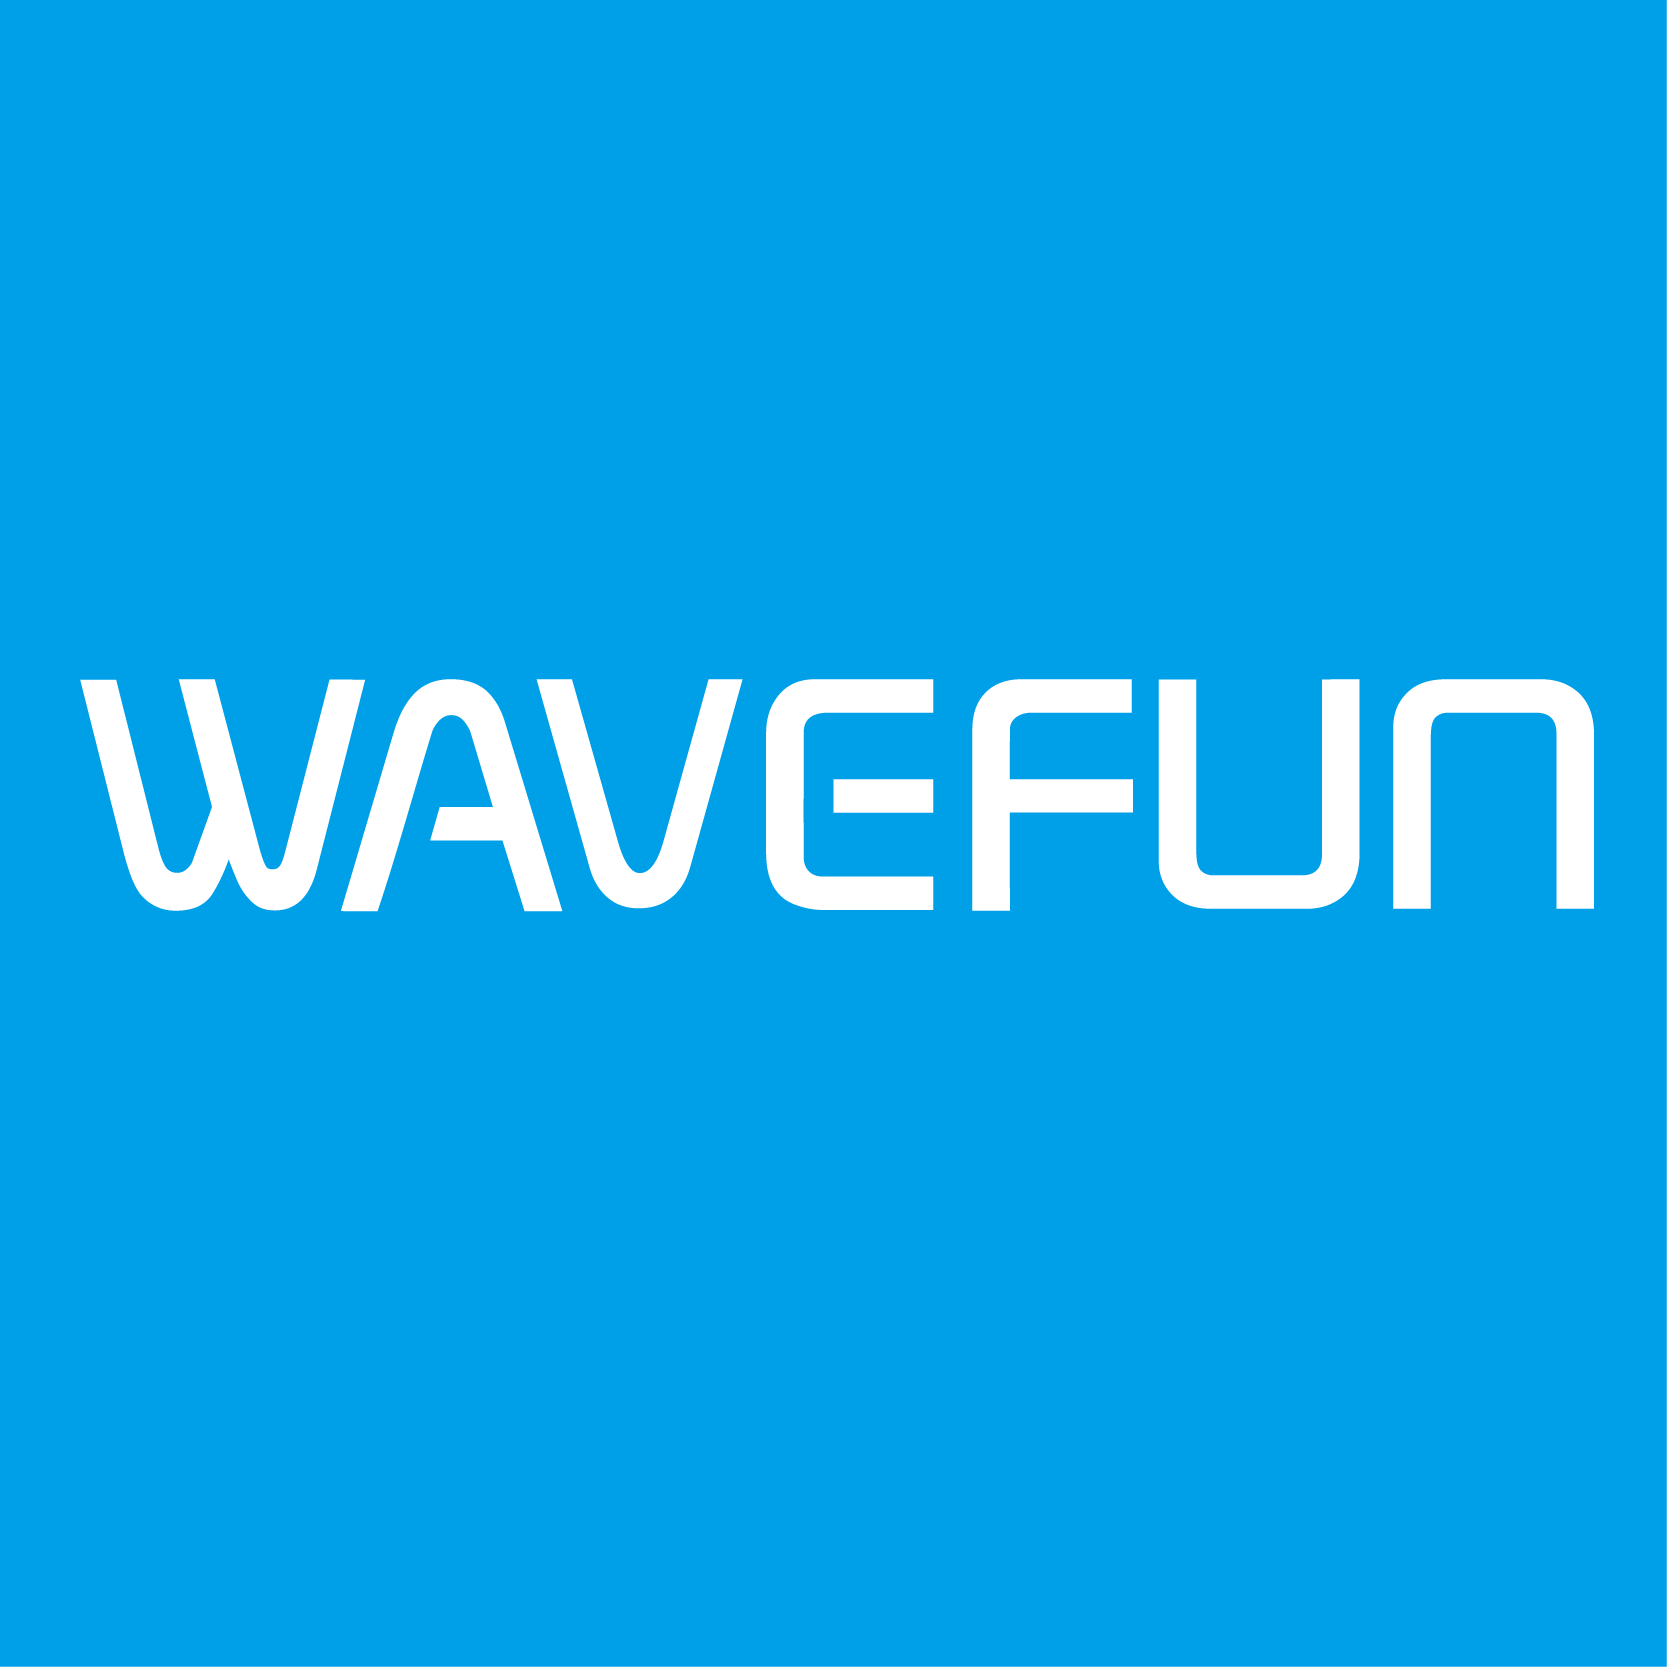 Wavefun logo